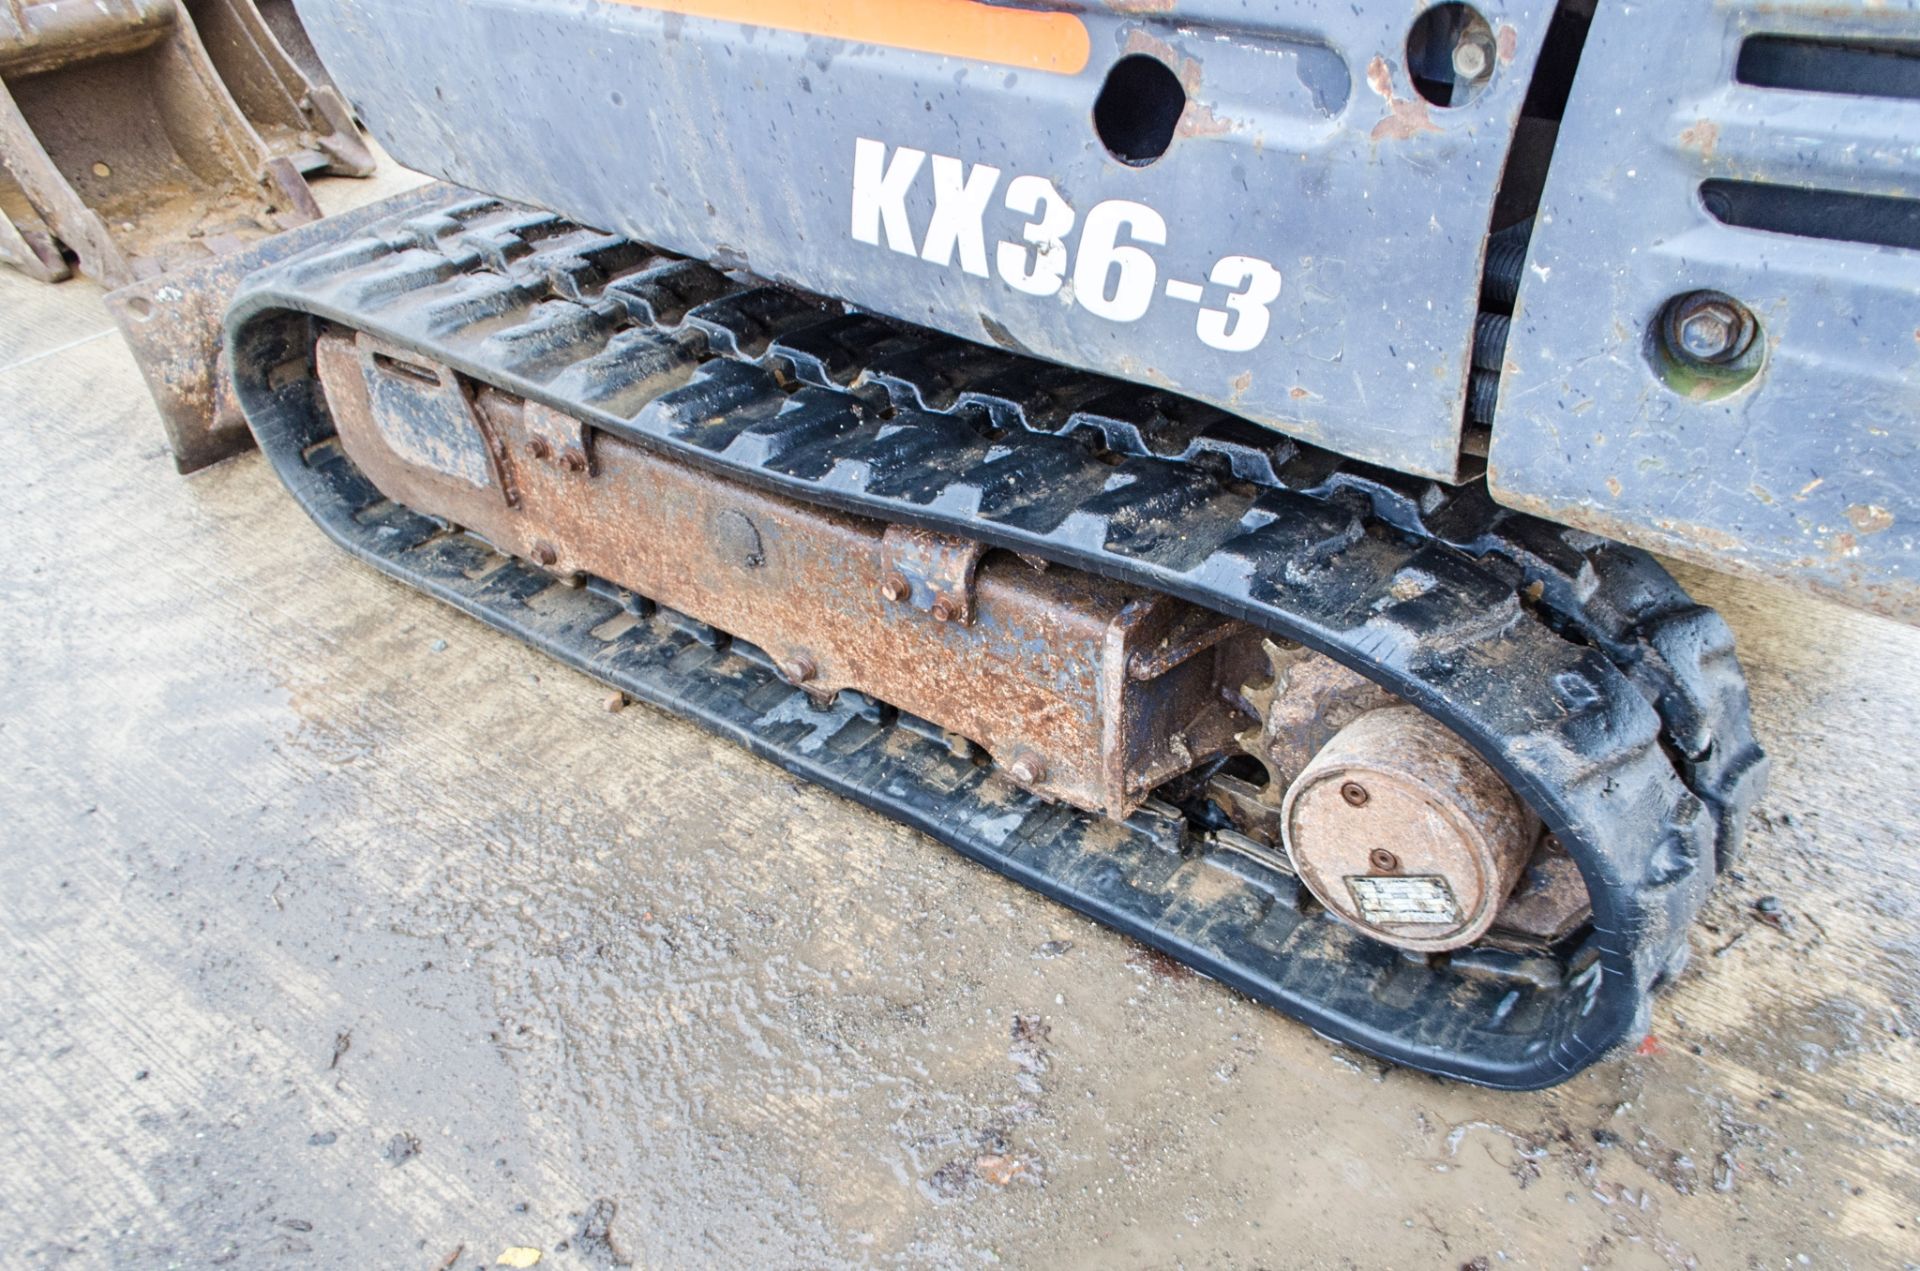 Kubota KX36-3 1.5 tonne rubber tracked mini excavator Year: 2004 S/N: 554433 Recorded Hours: 3629 - Image 11 of 24